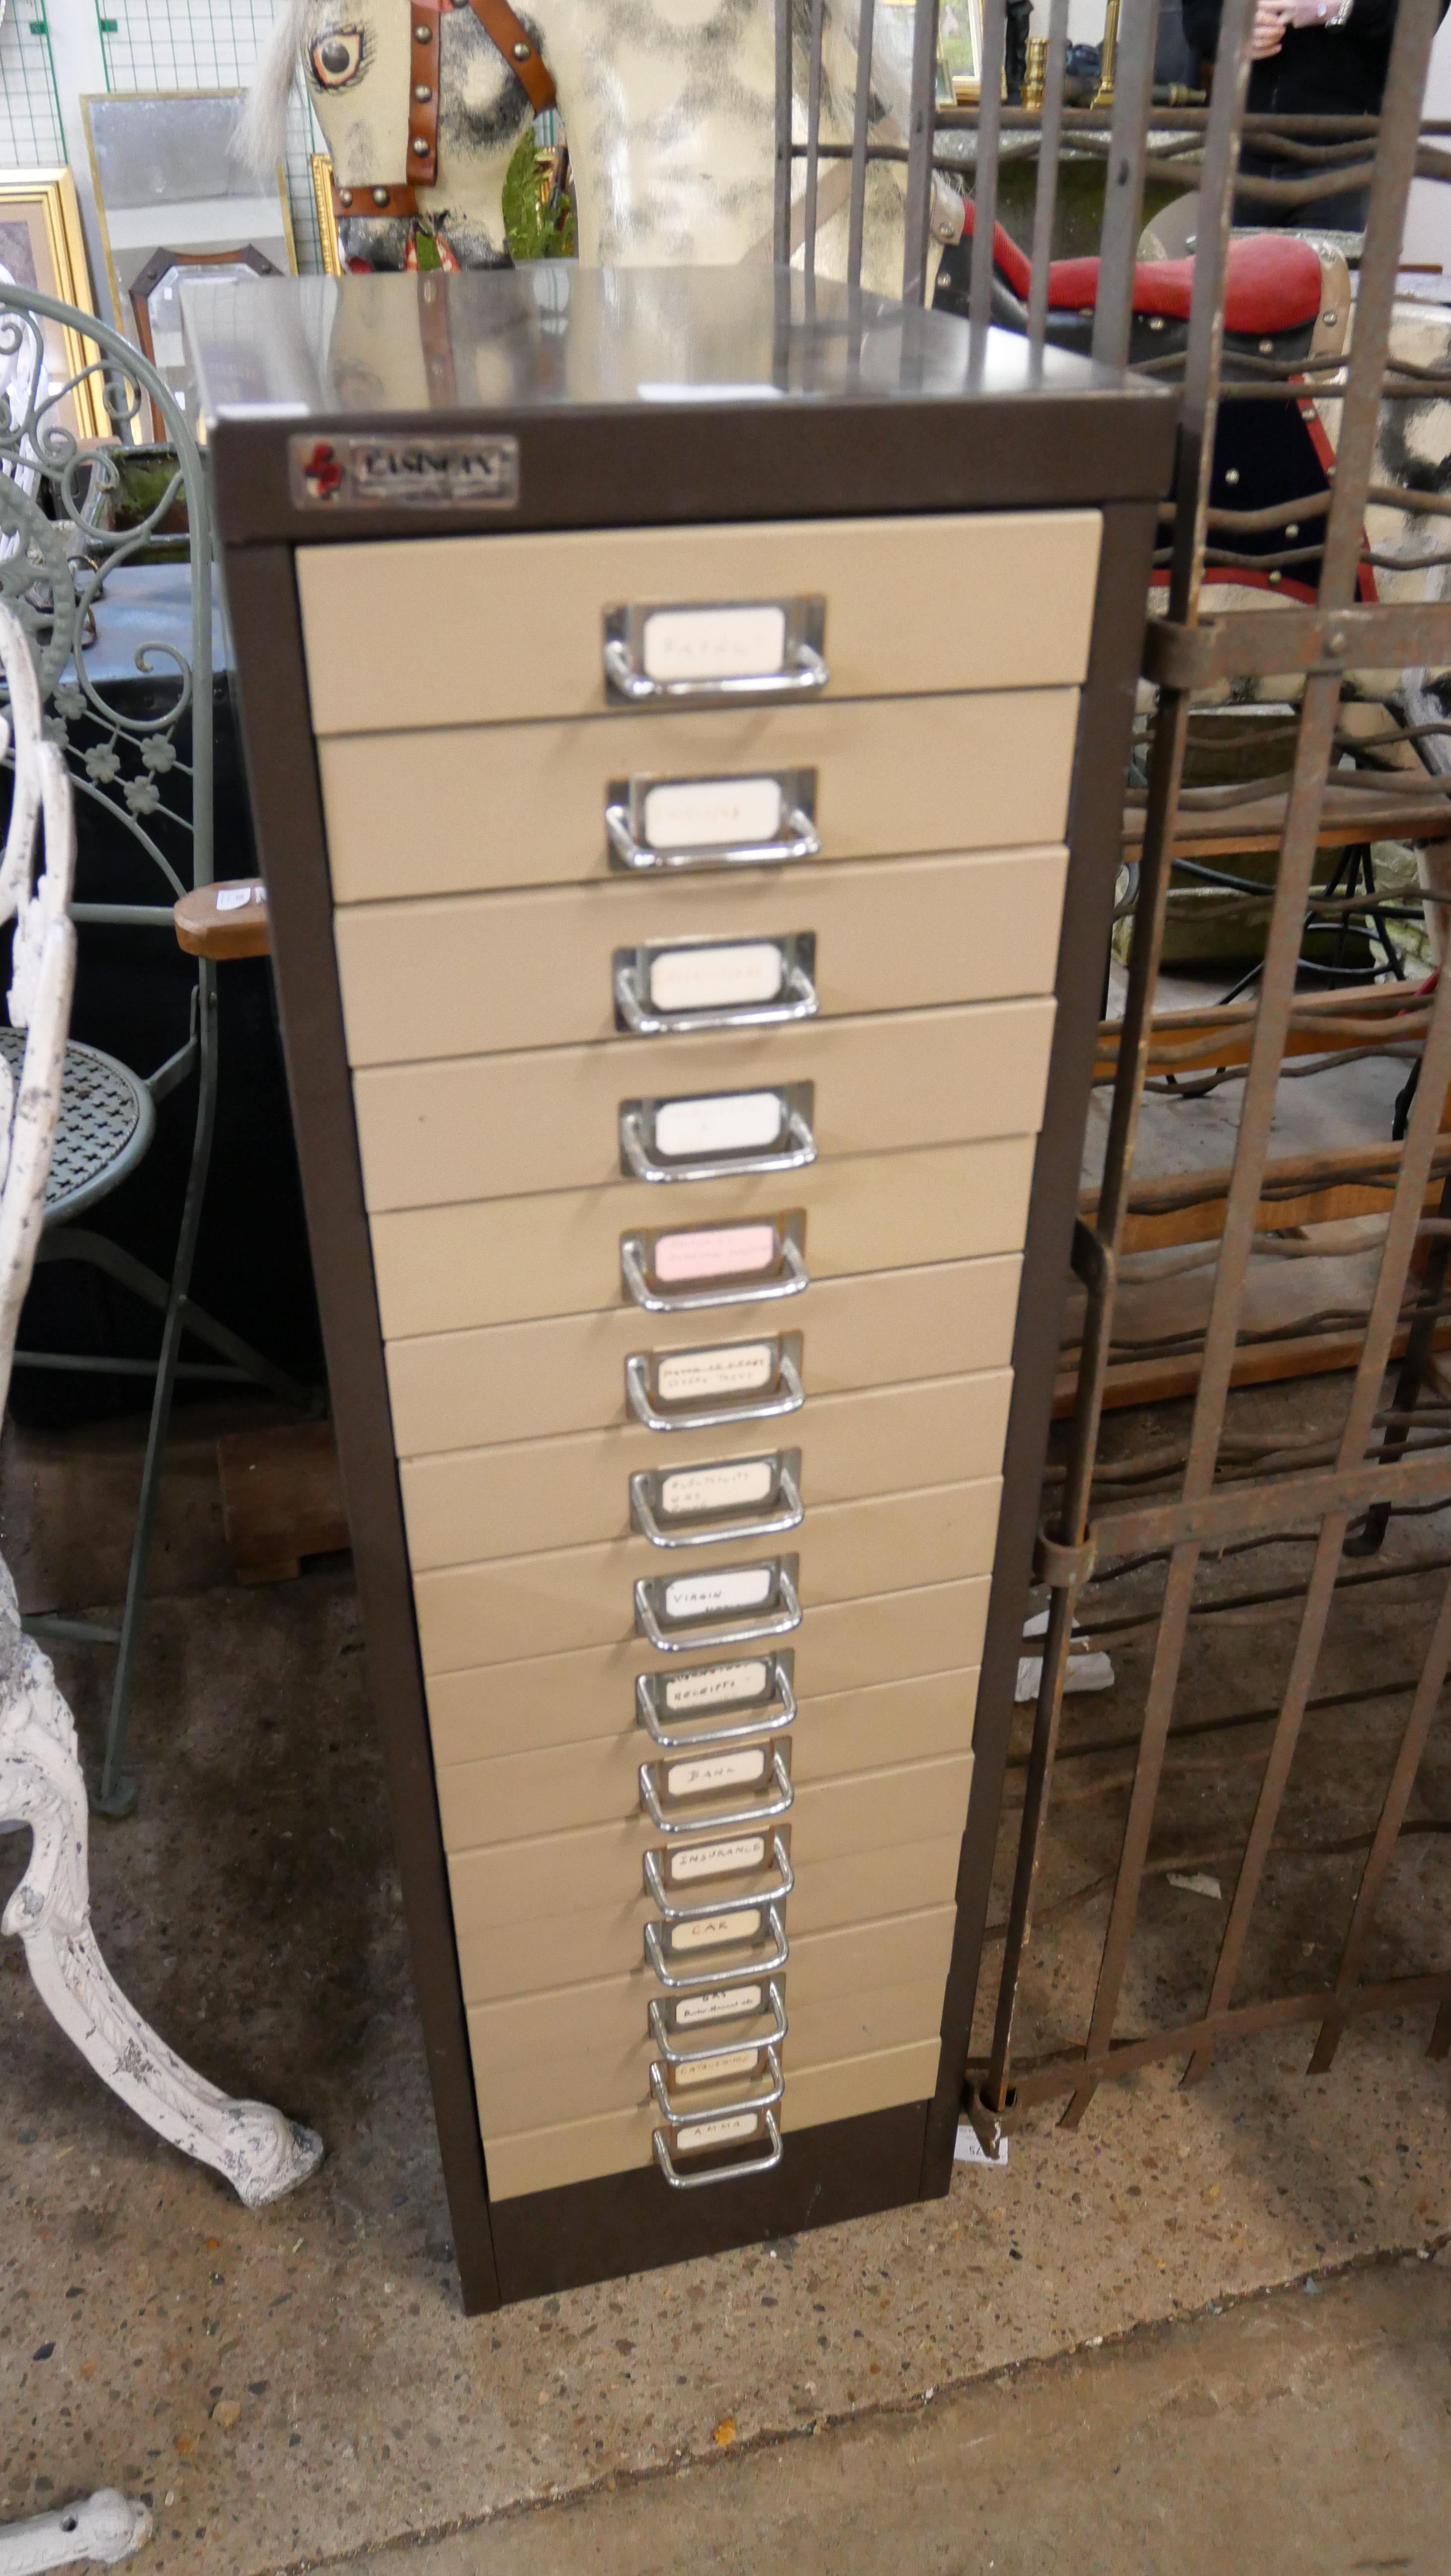 A fifteen drawer metal cabinet